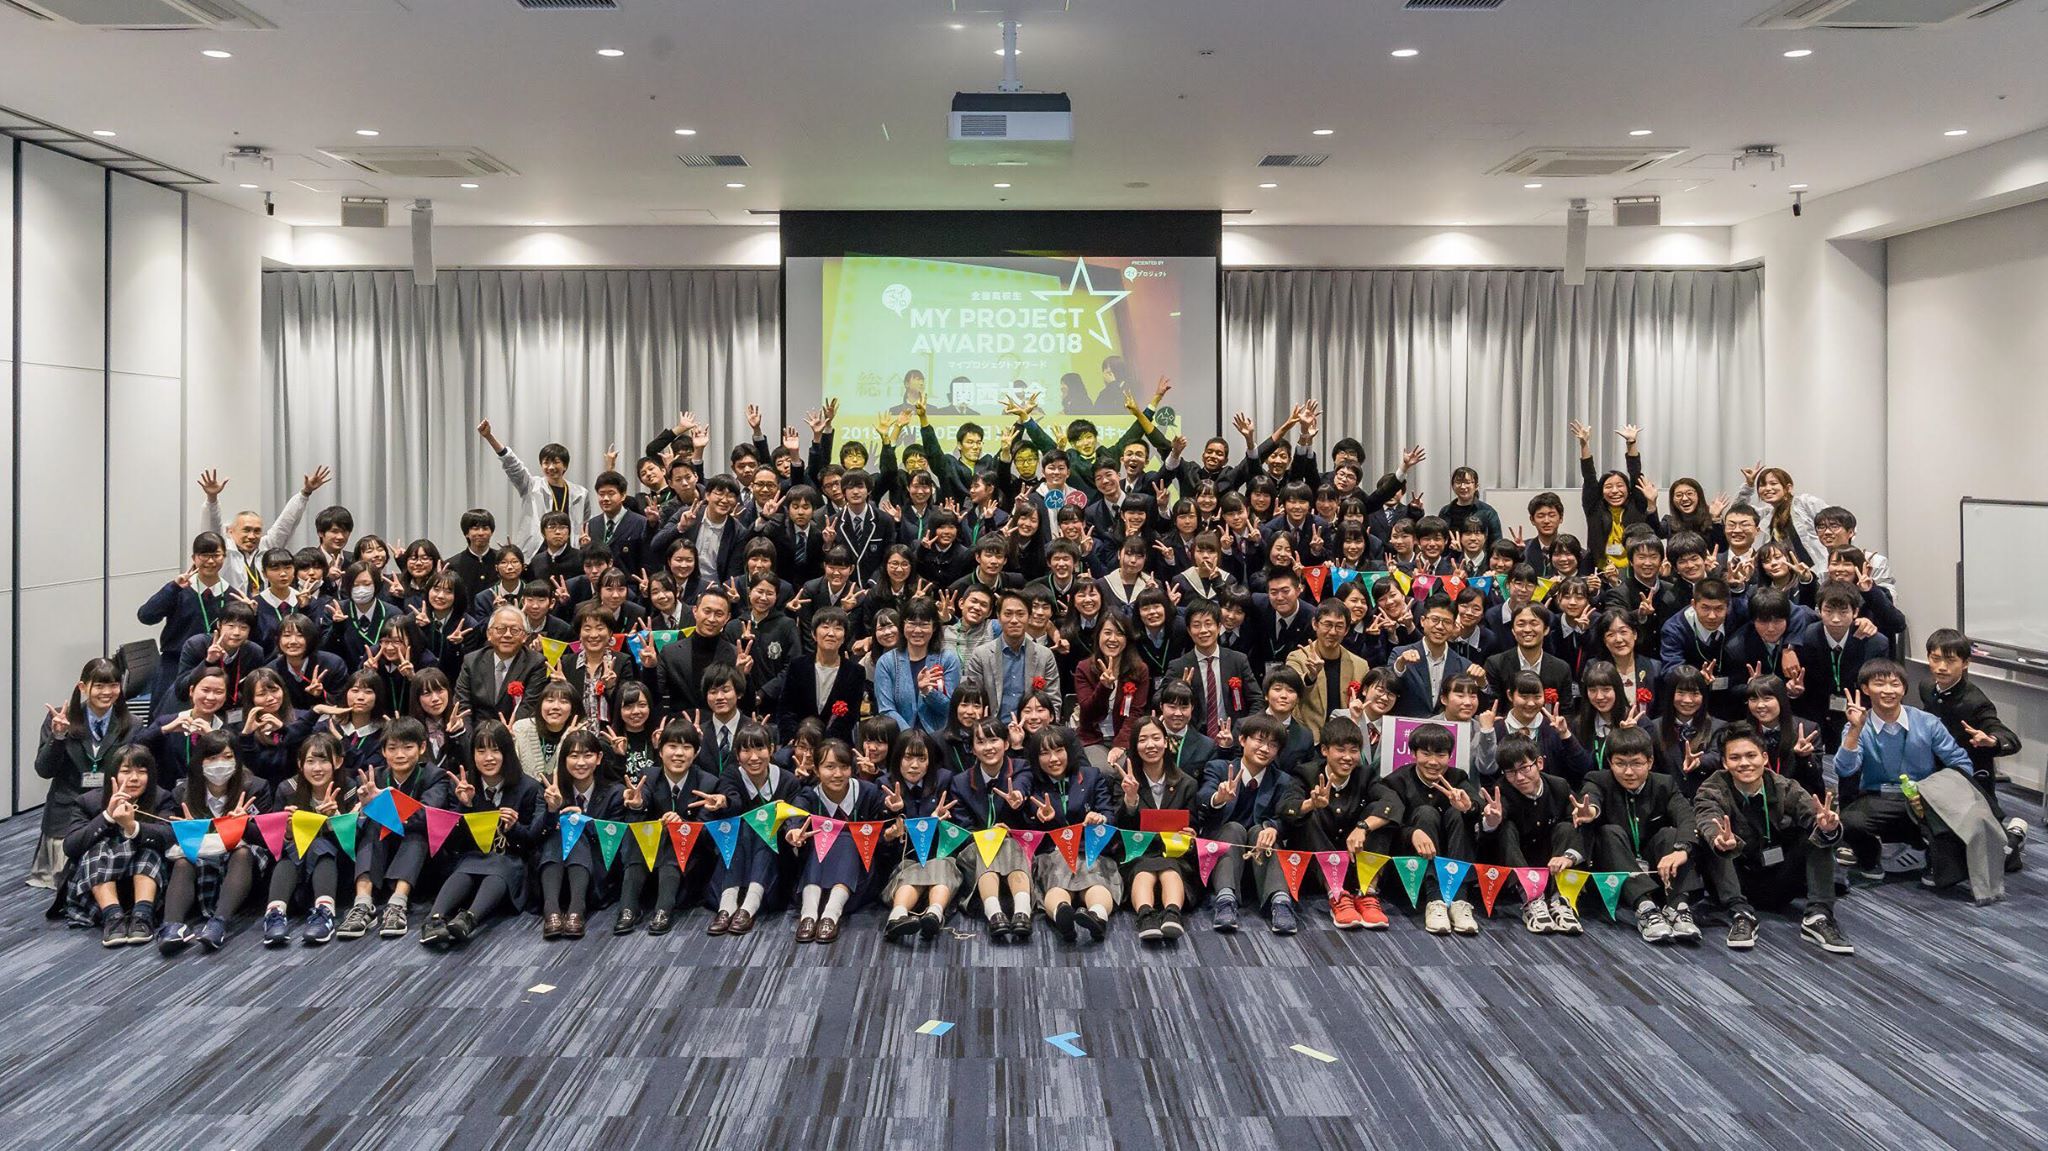 Award18 関西大会が関西大学梅田キャンパスで開催されました News マイプロジェクト